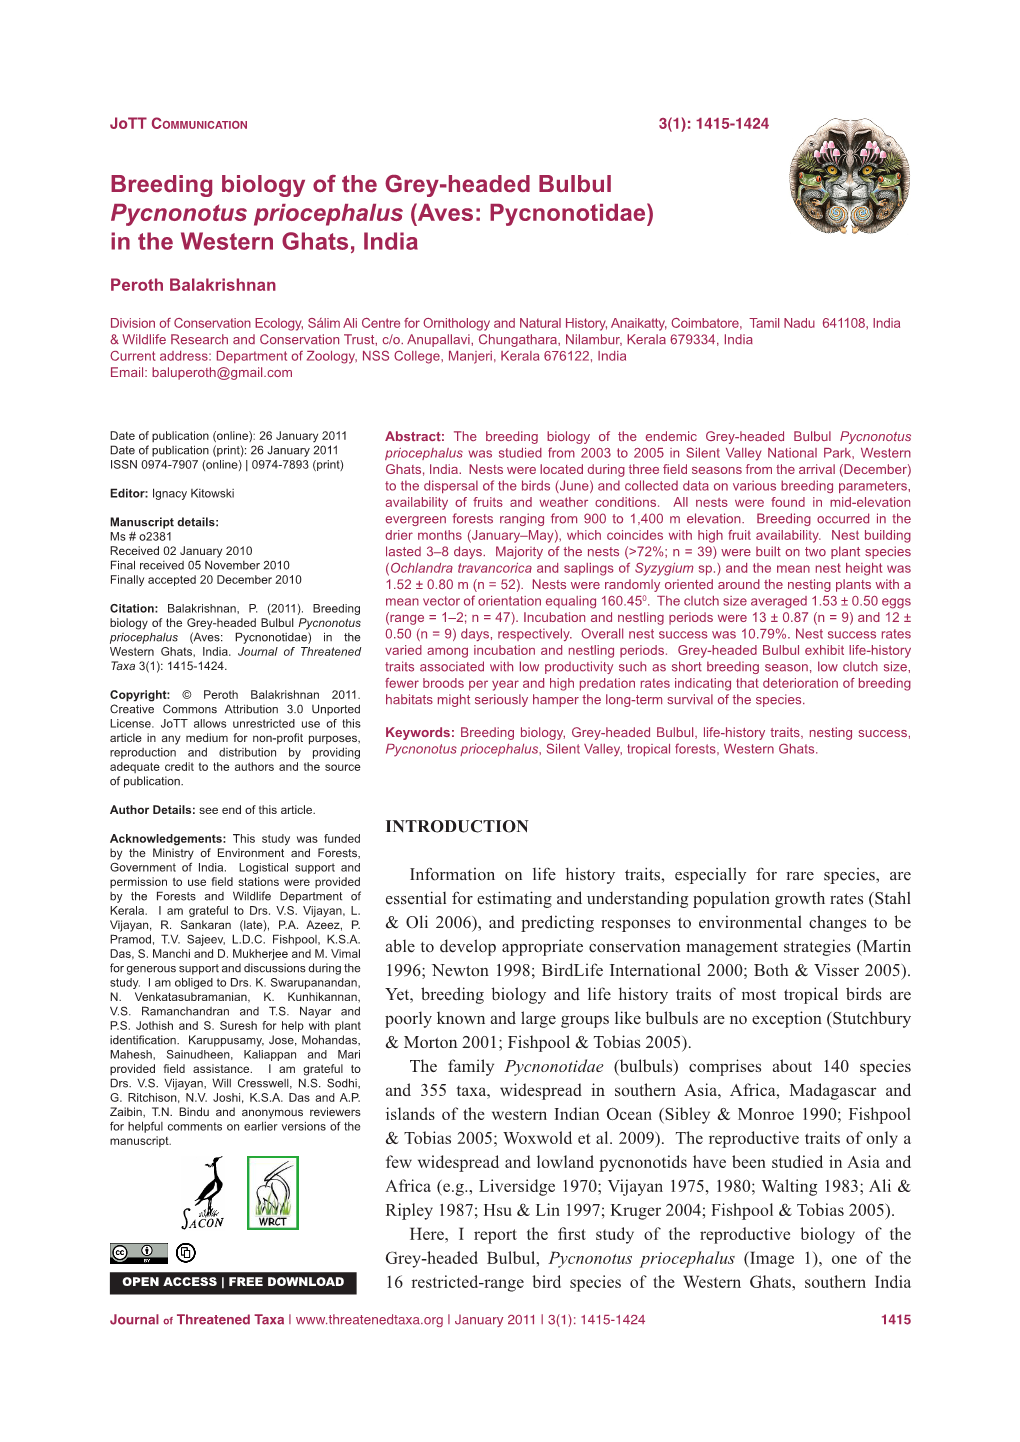 Breeding Biology of the Grey-Headed Bulbul Pycnonotus Priocephalus (Aves: Pycnonotidae) in the Western Ghats, India